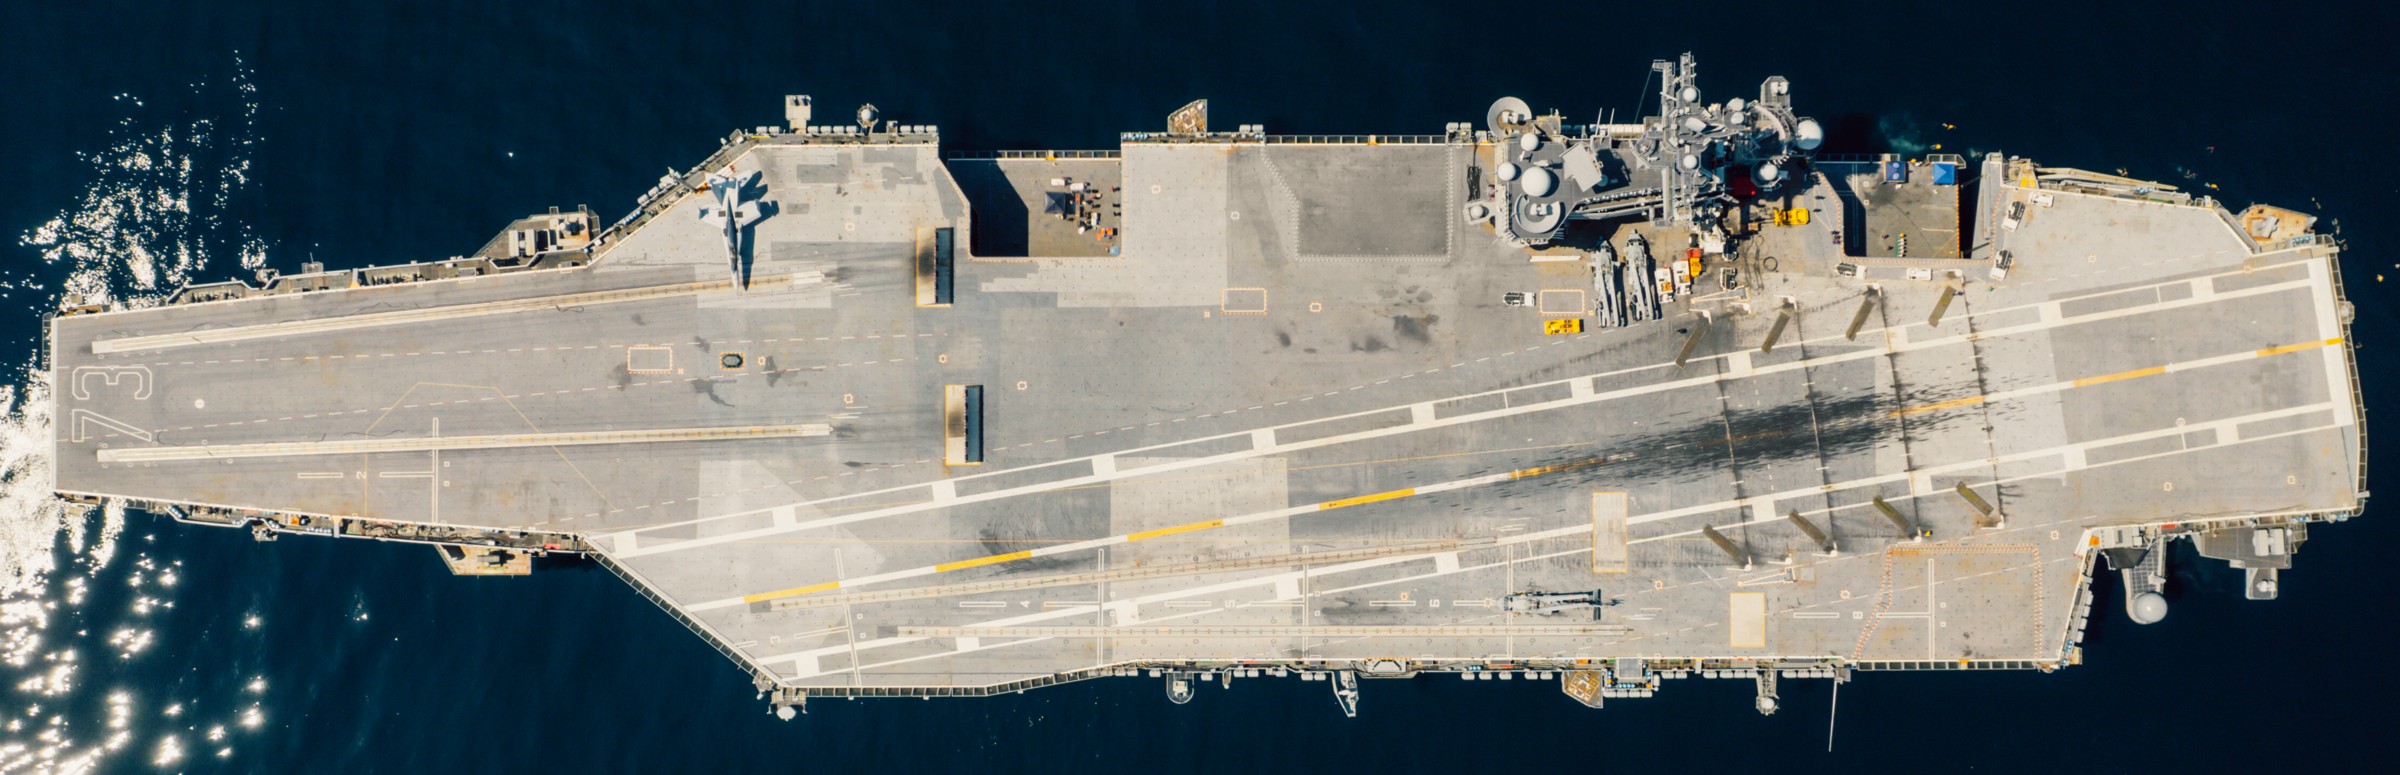 cvn-73 uss george washington nimitz class aircraft carrier us navy 142